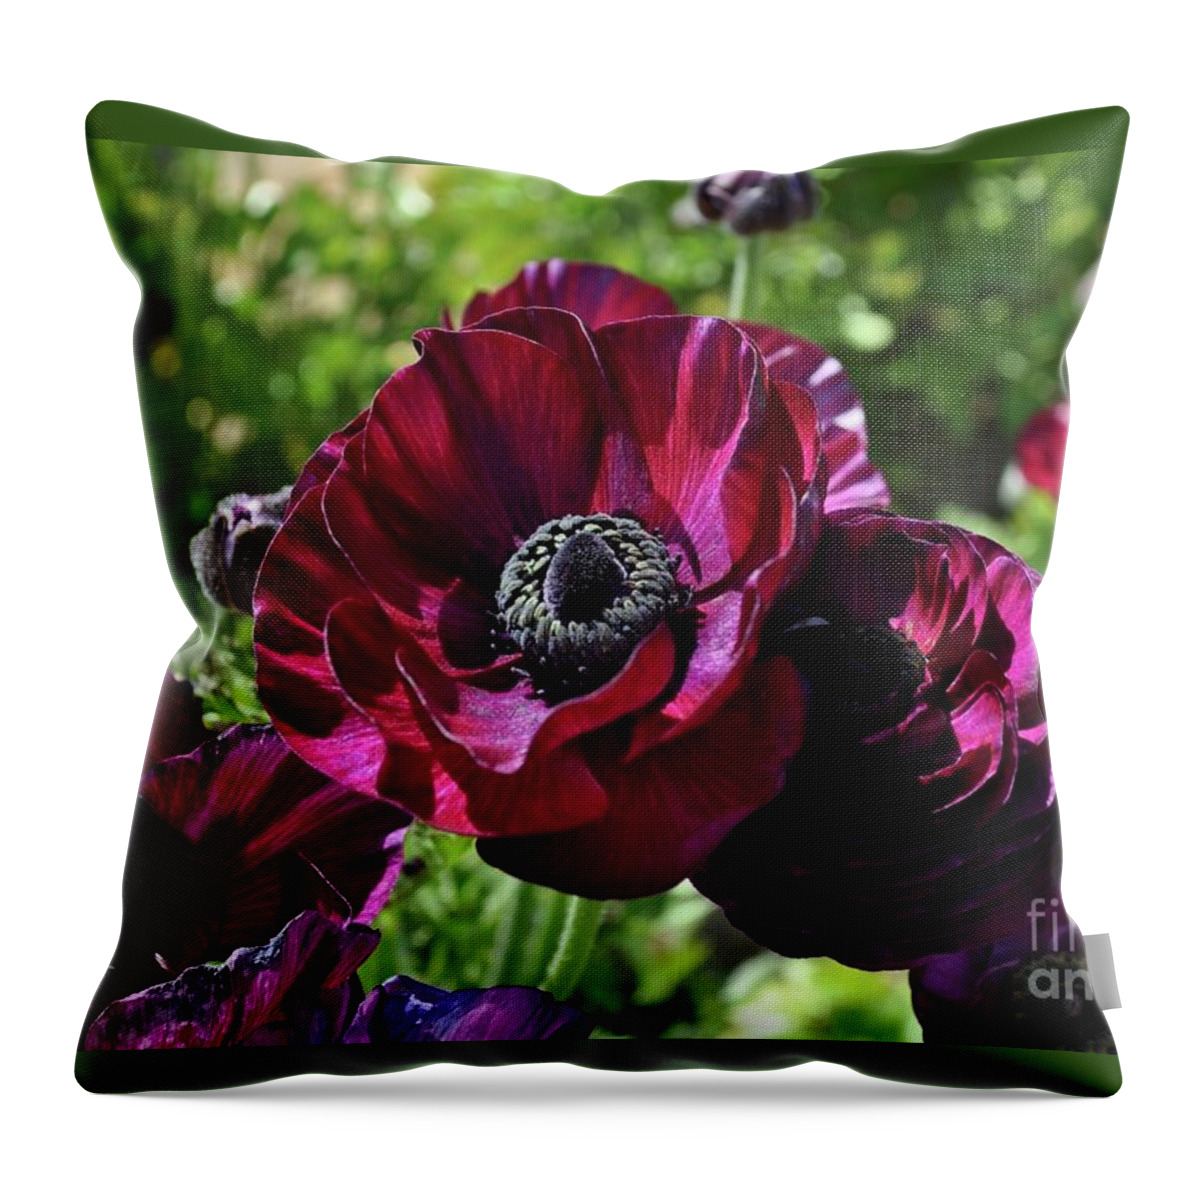 Fuchsia Throw Pillow featuring the photograph Deep Ranunculus by Bridgette Gomes